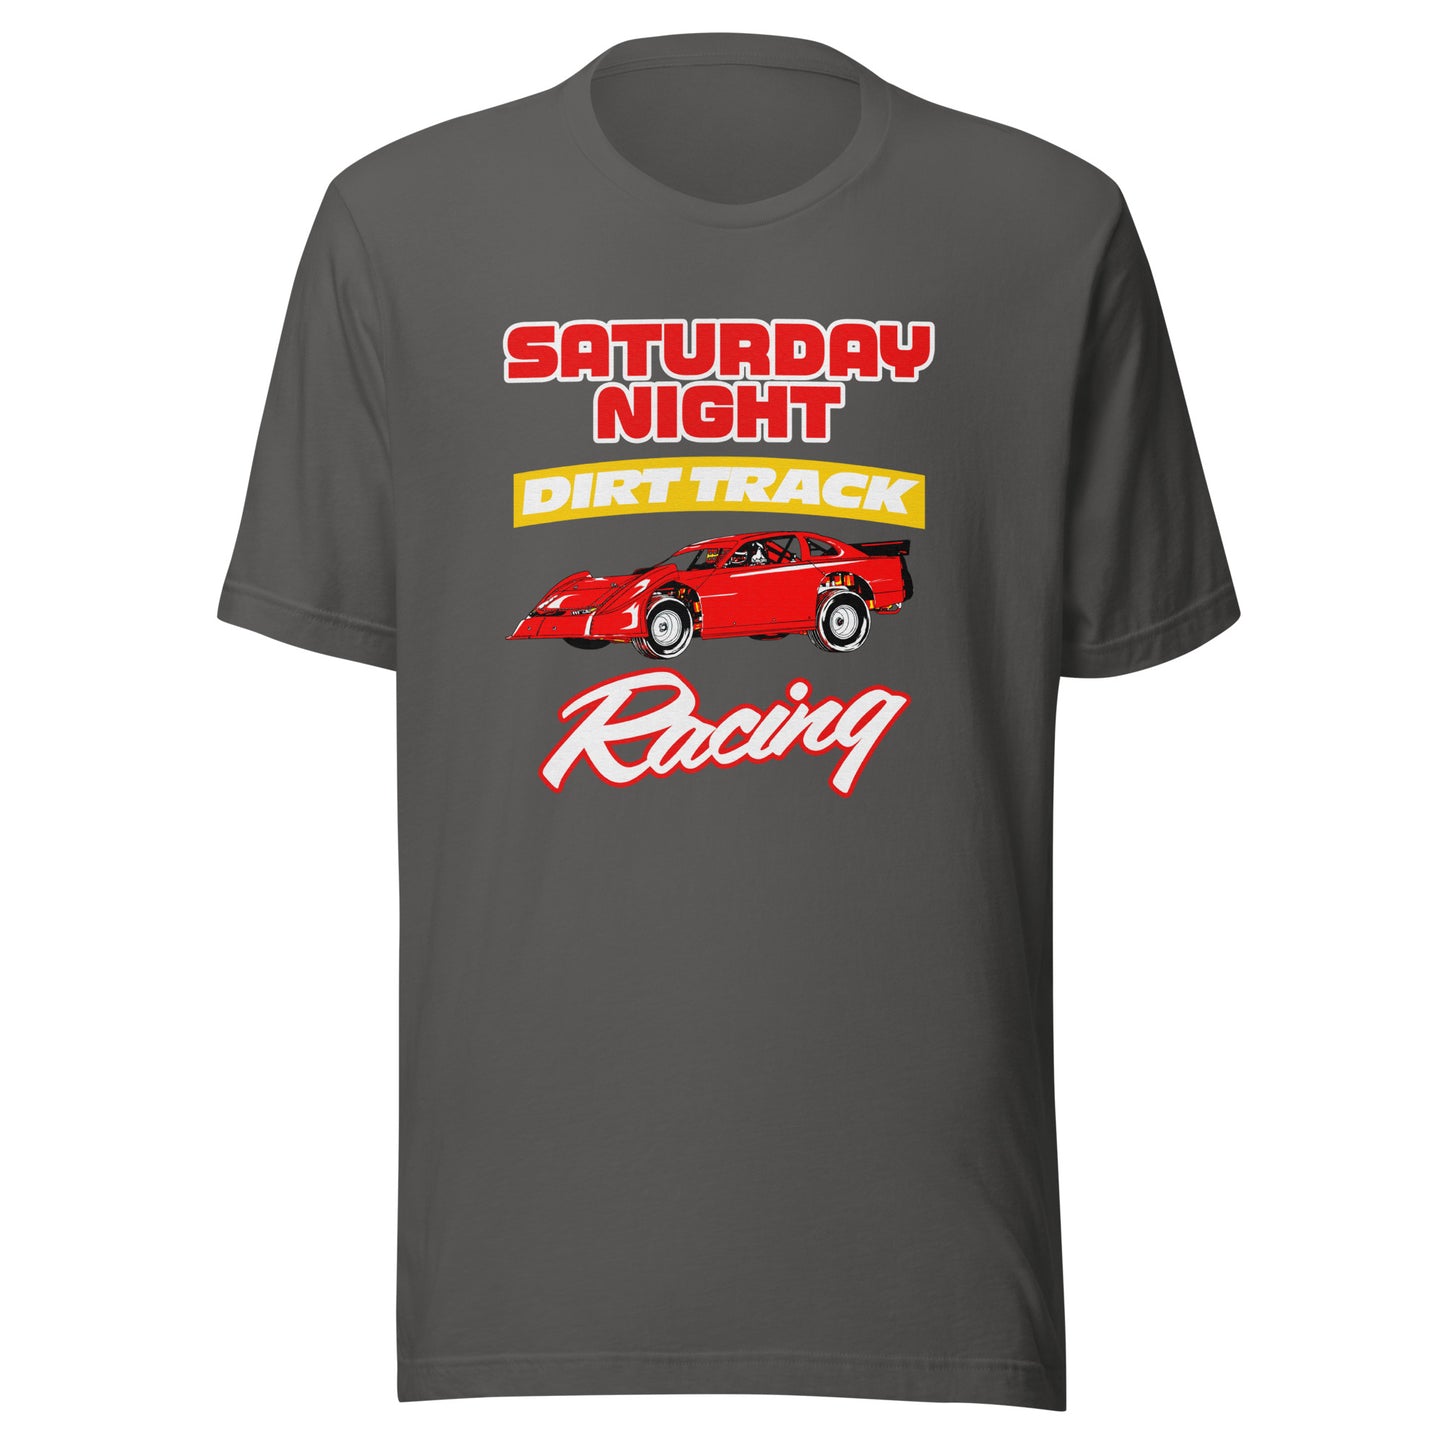 Saturday Night Dirt Track Racing